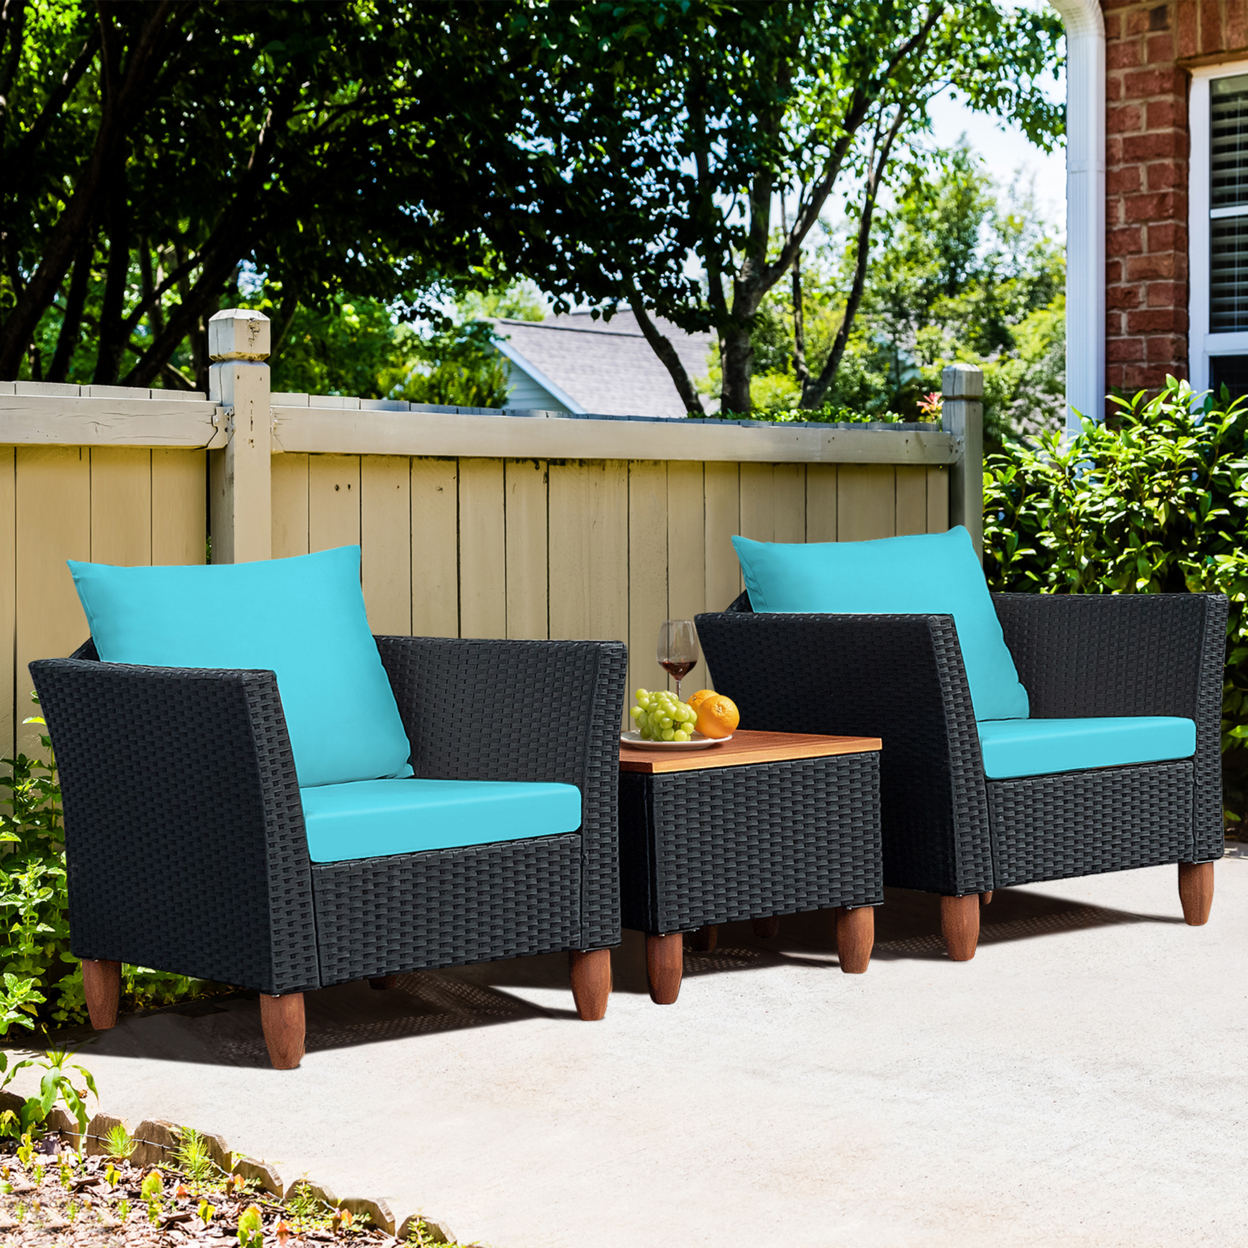 3PCS Patio Rattan Conversation Furniture Set Yard Outdoor W/ Turquoise Cushions